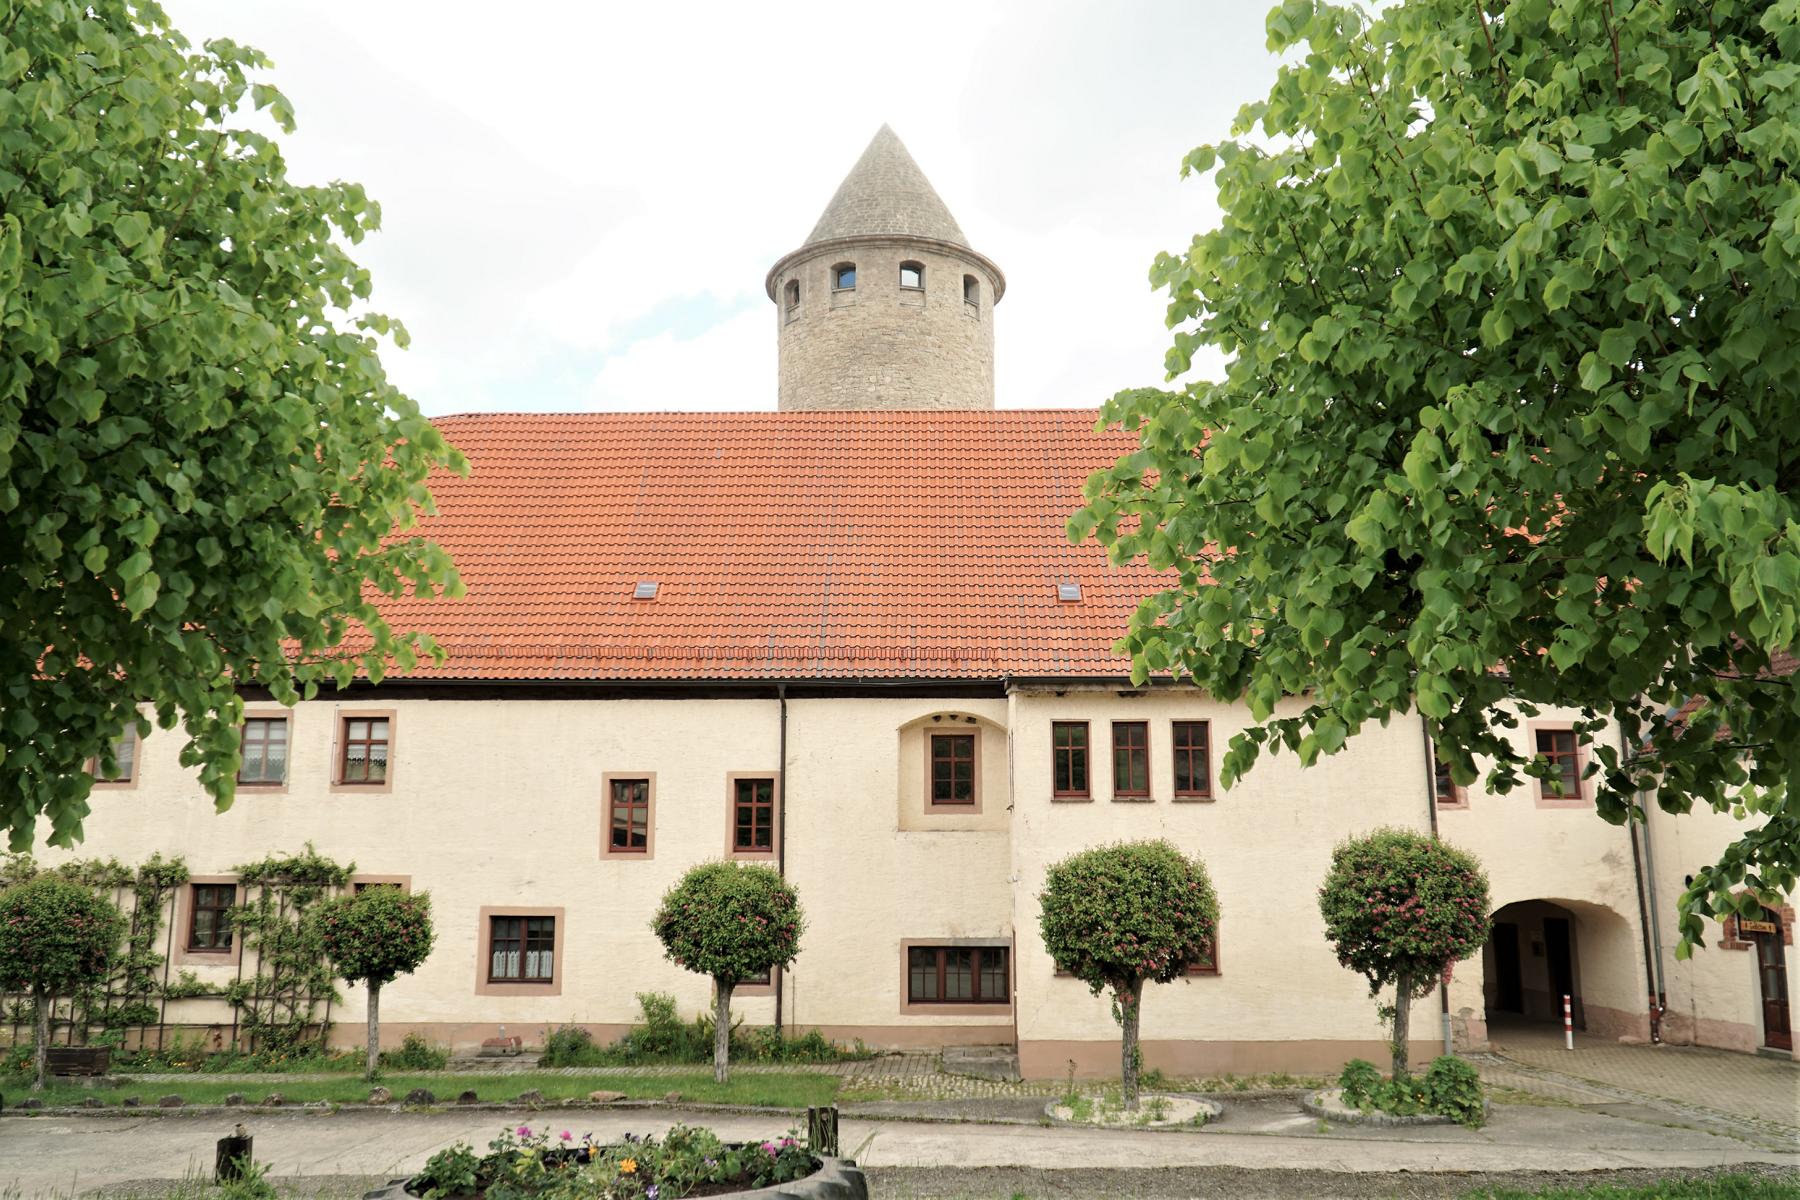 Burggarten Haynsburg